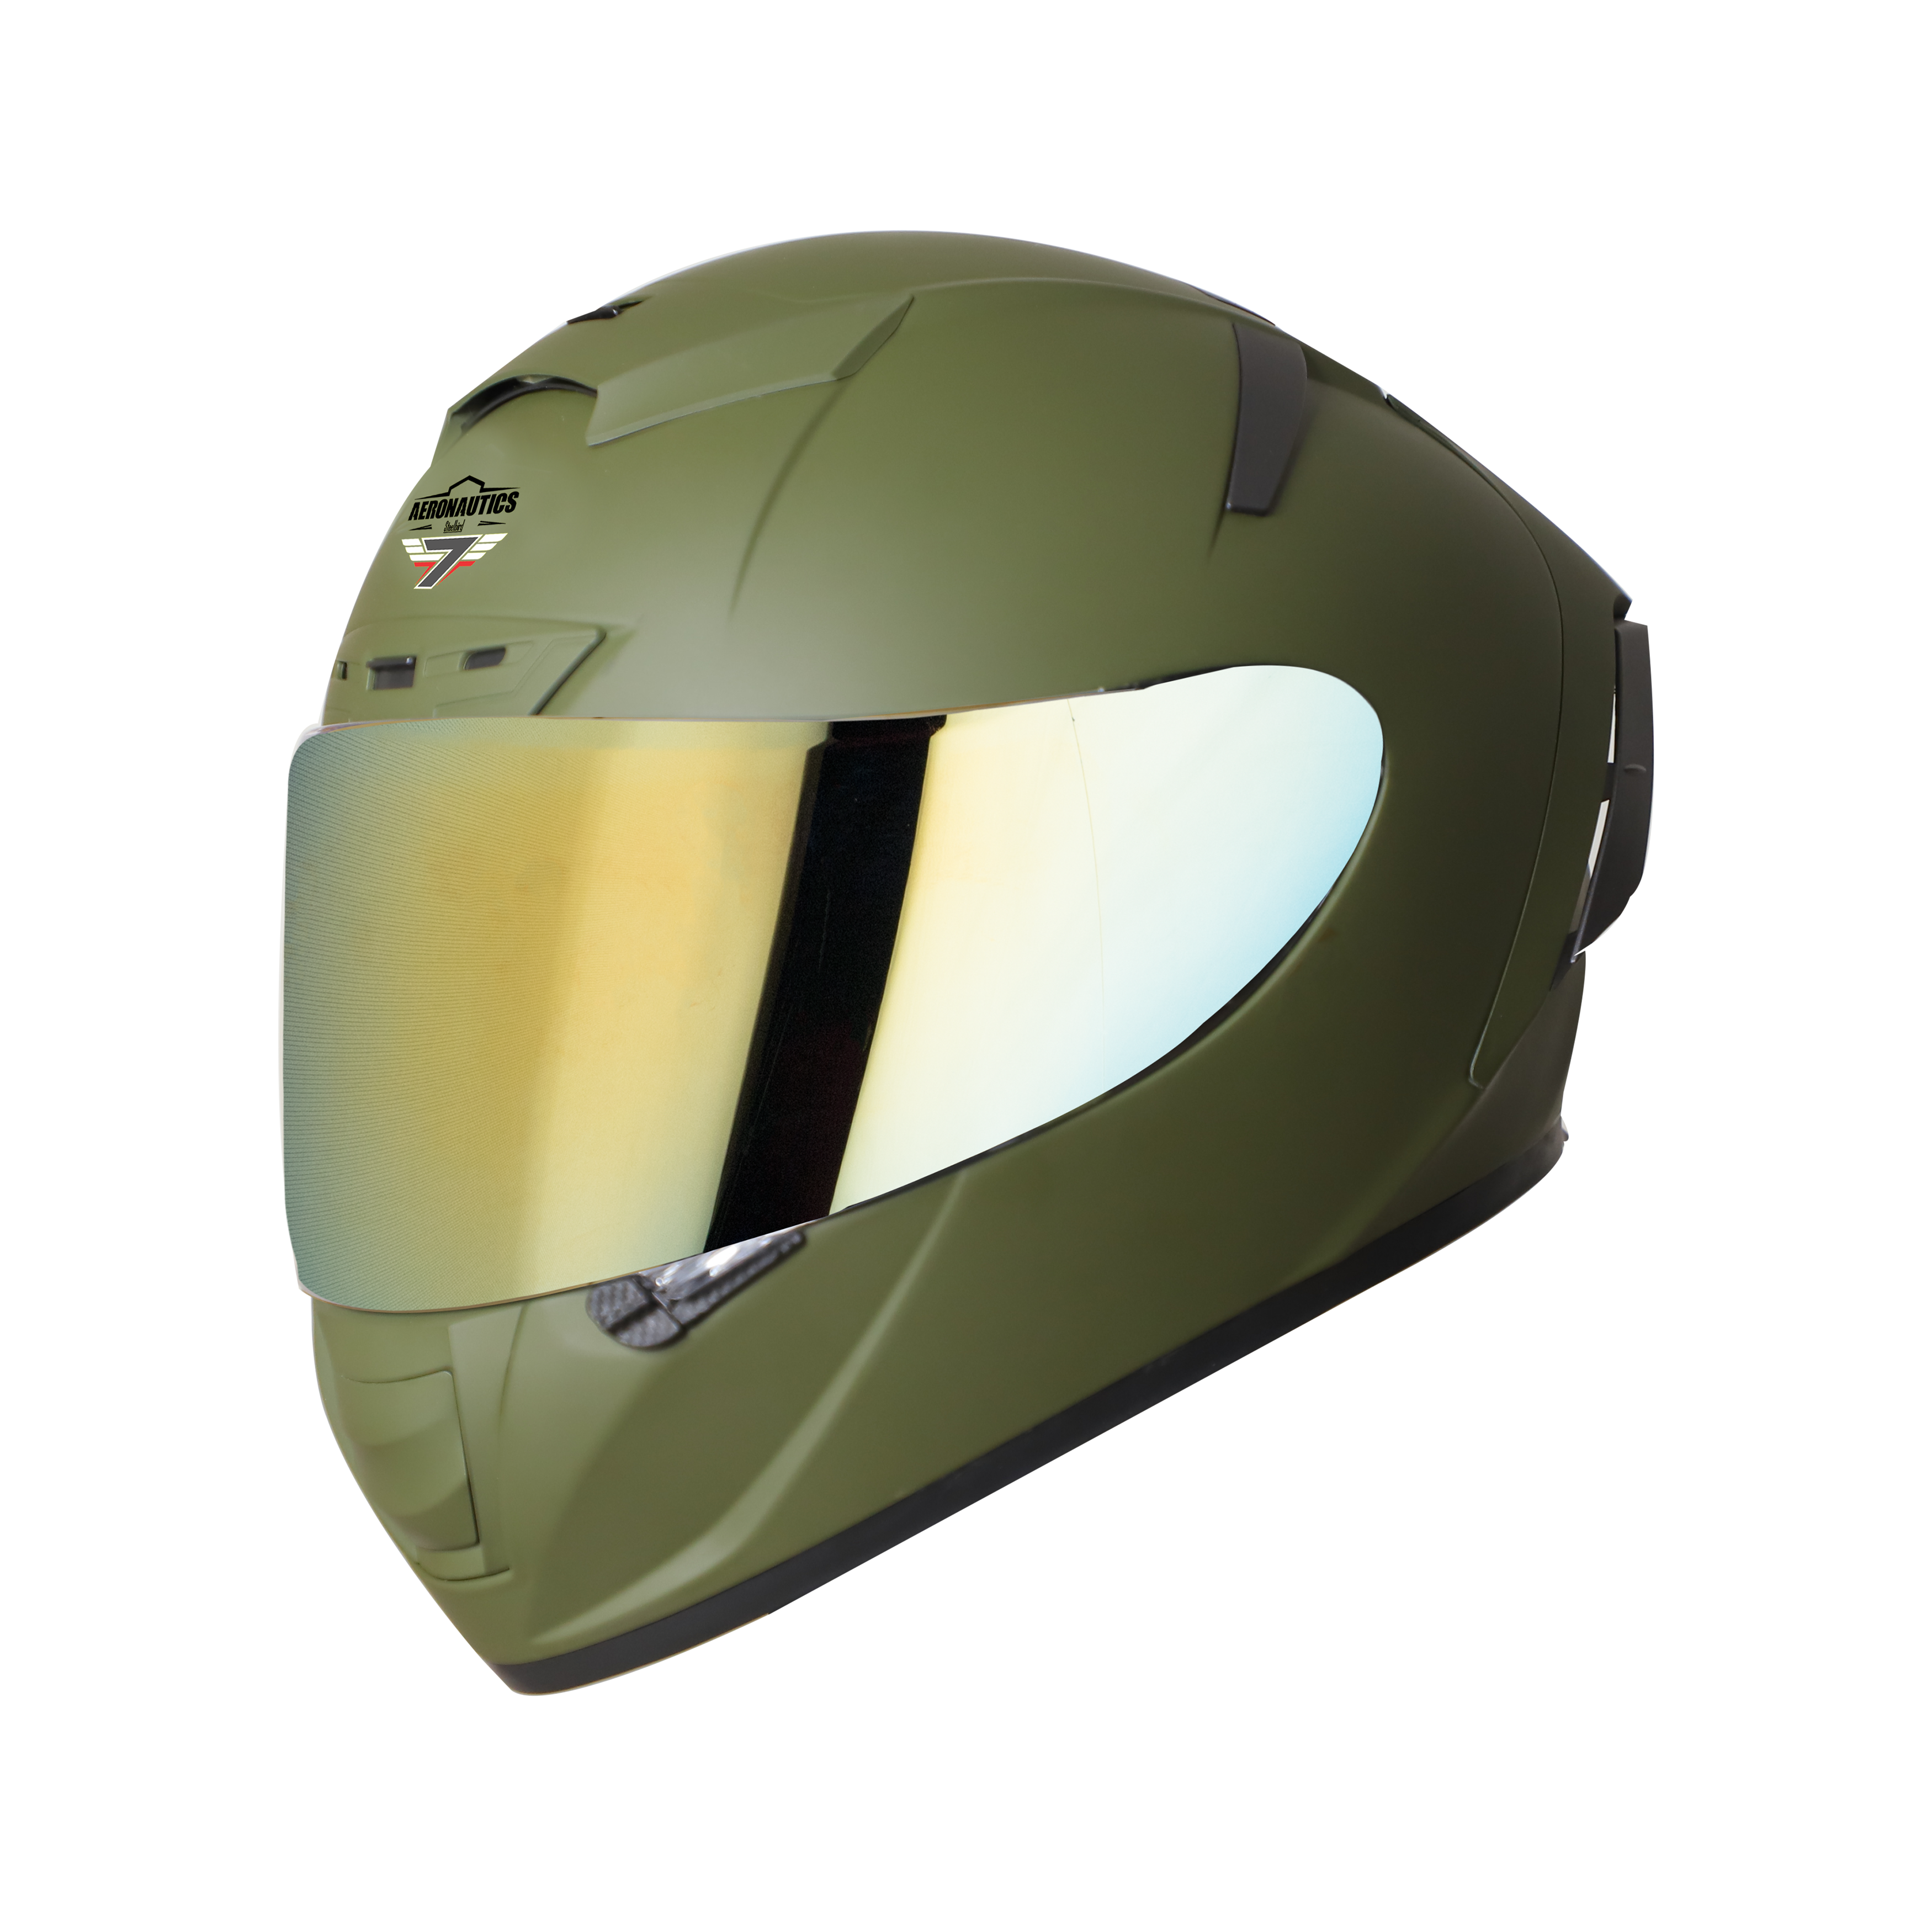 Steelbird SA-2 7Wings Super Aeronautics Full Face Helmet (Matt Battle Green with Chrome Gold Visor)